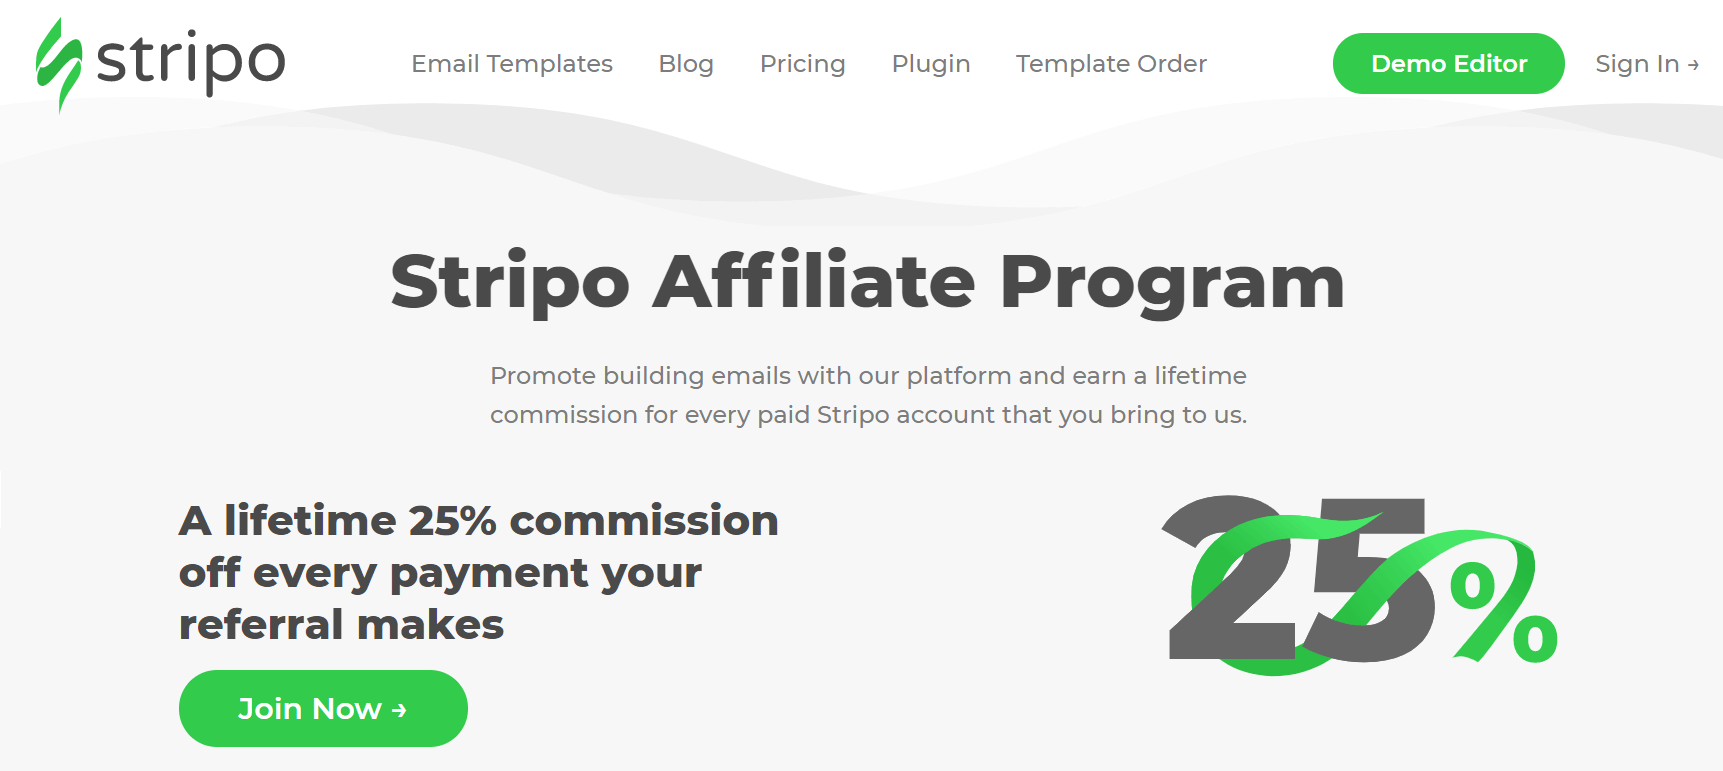 Stripo email marketing program for affiliates